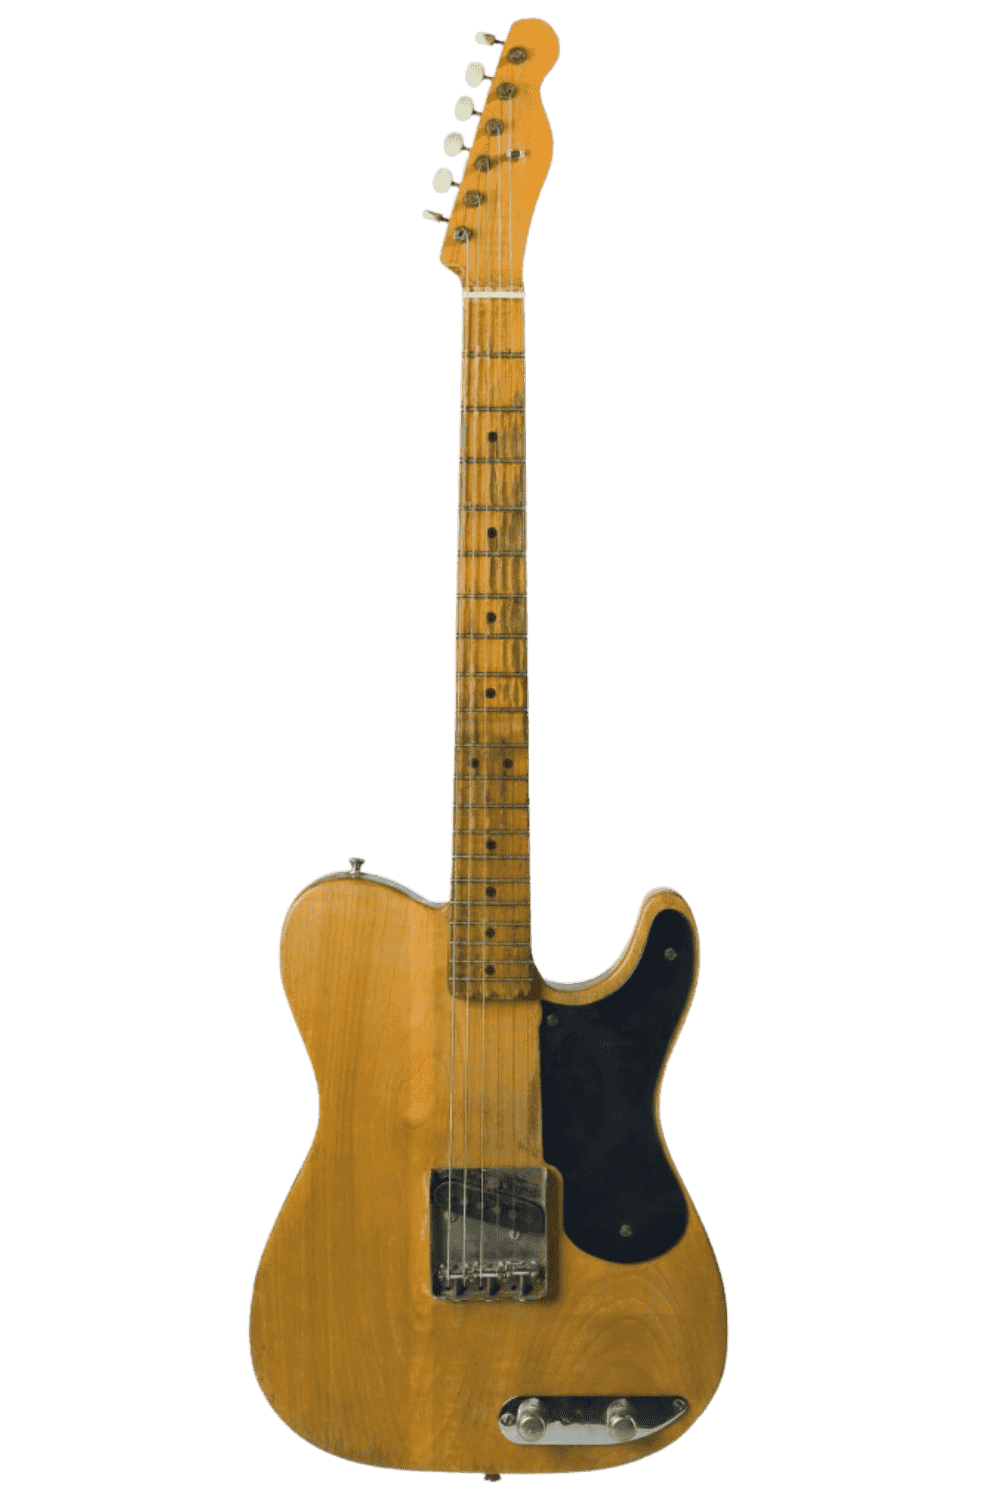 Fender 1949 Broadcaster Image source: twitter